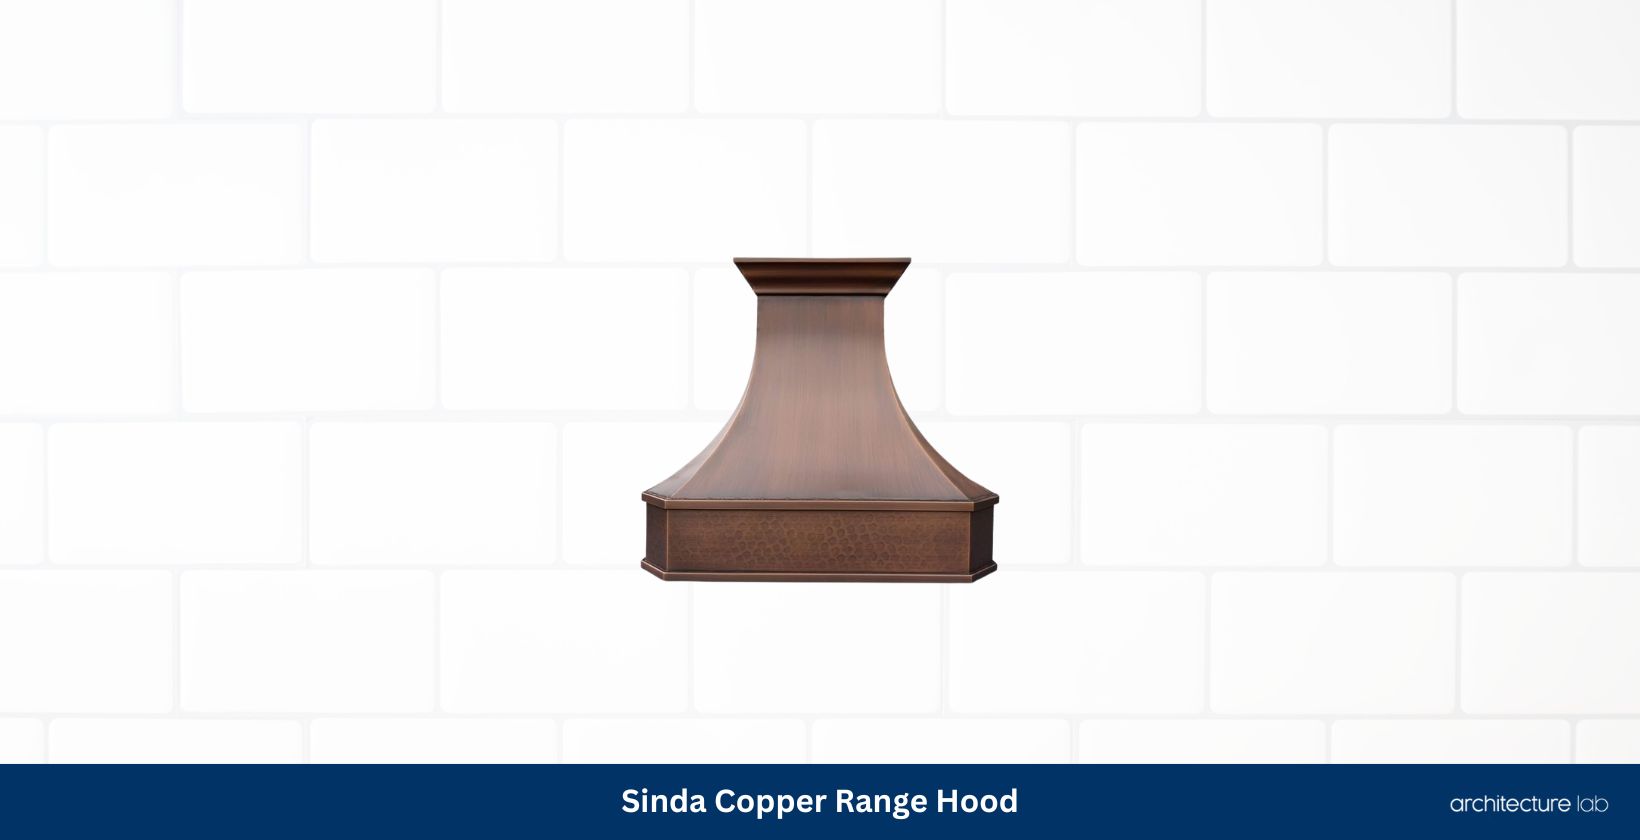 Sinda copper range hood